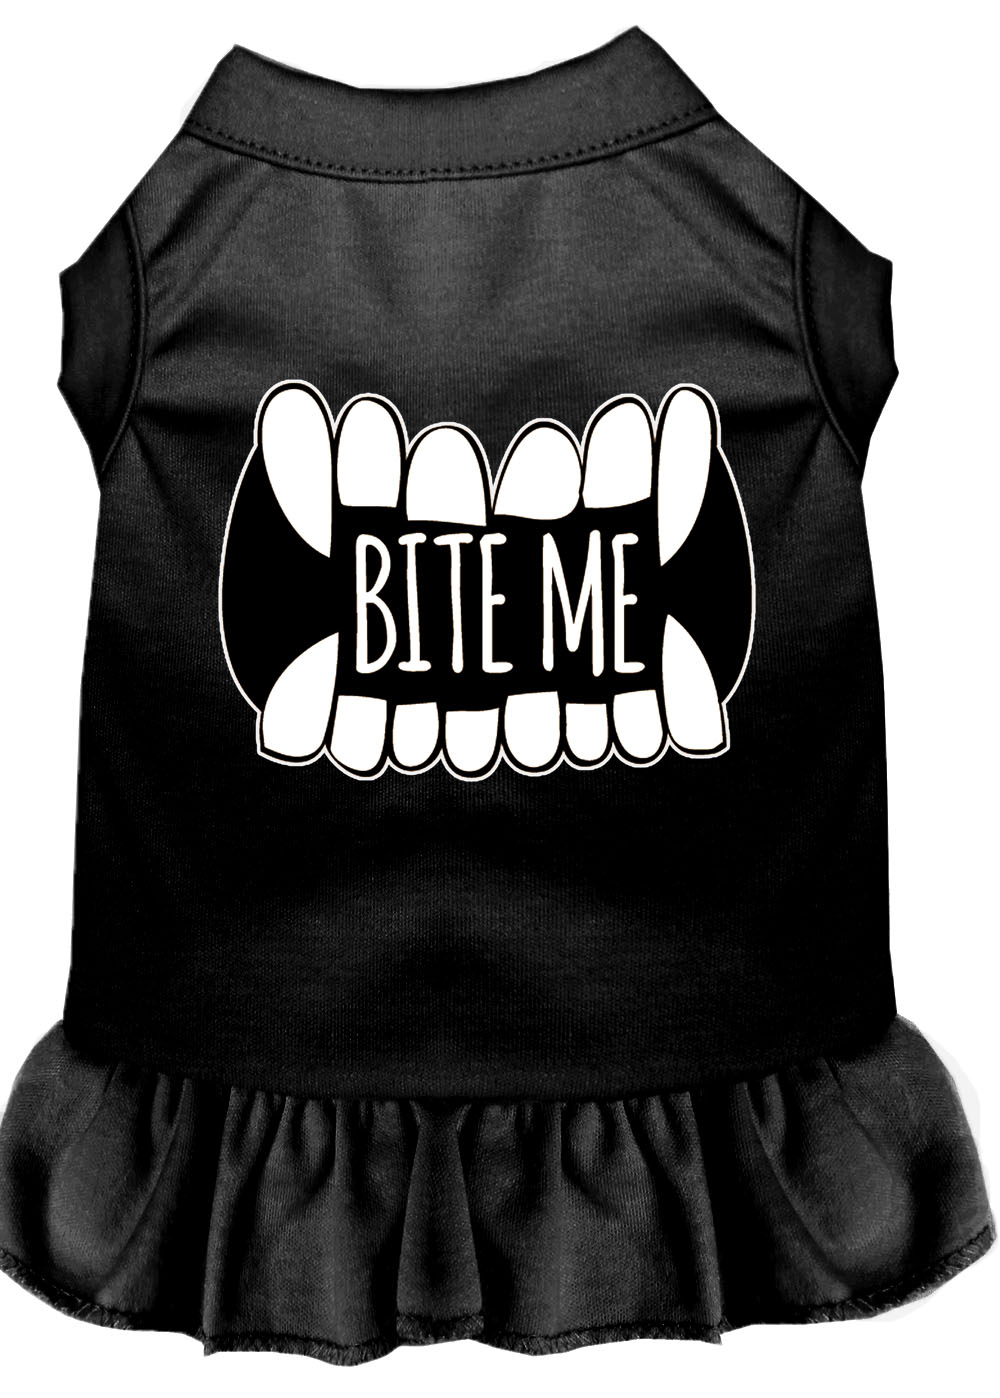 Bite Me Screen Print Dog Dress Black XL